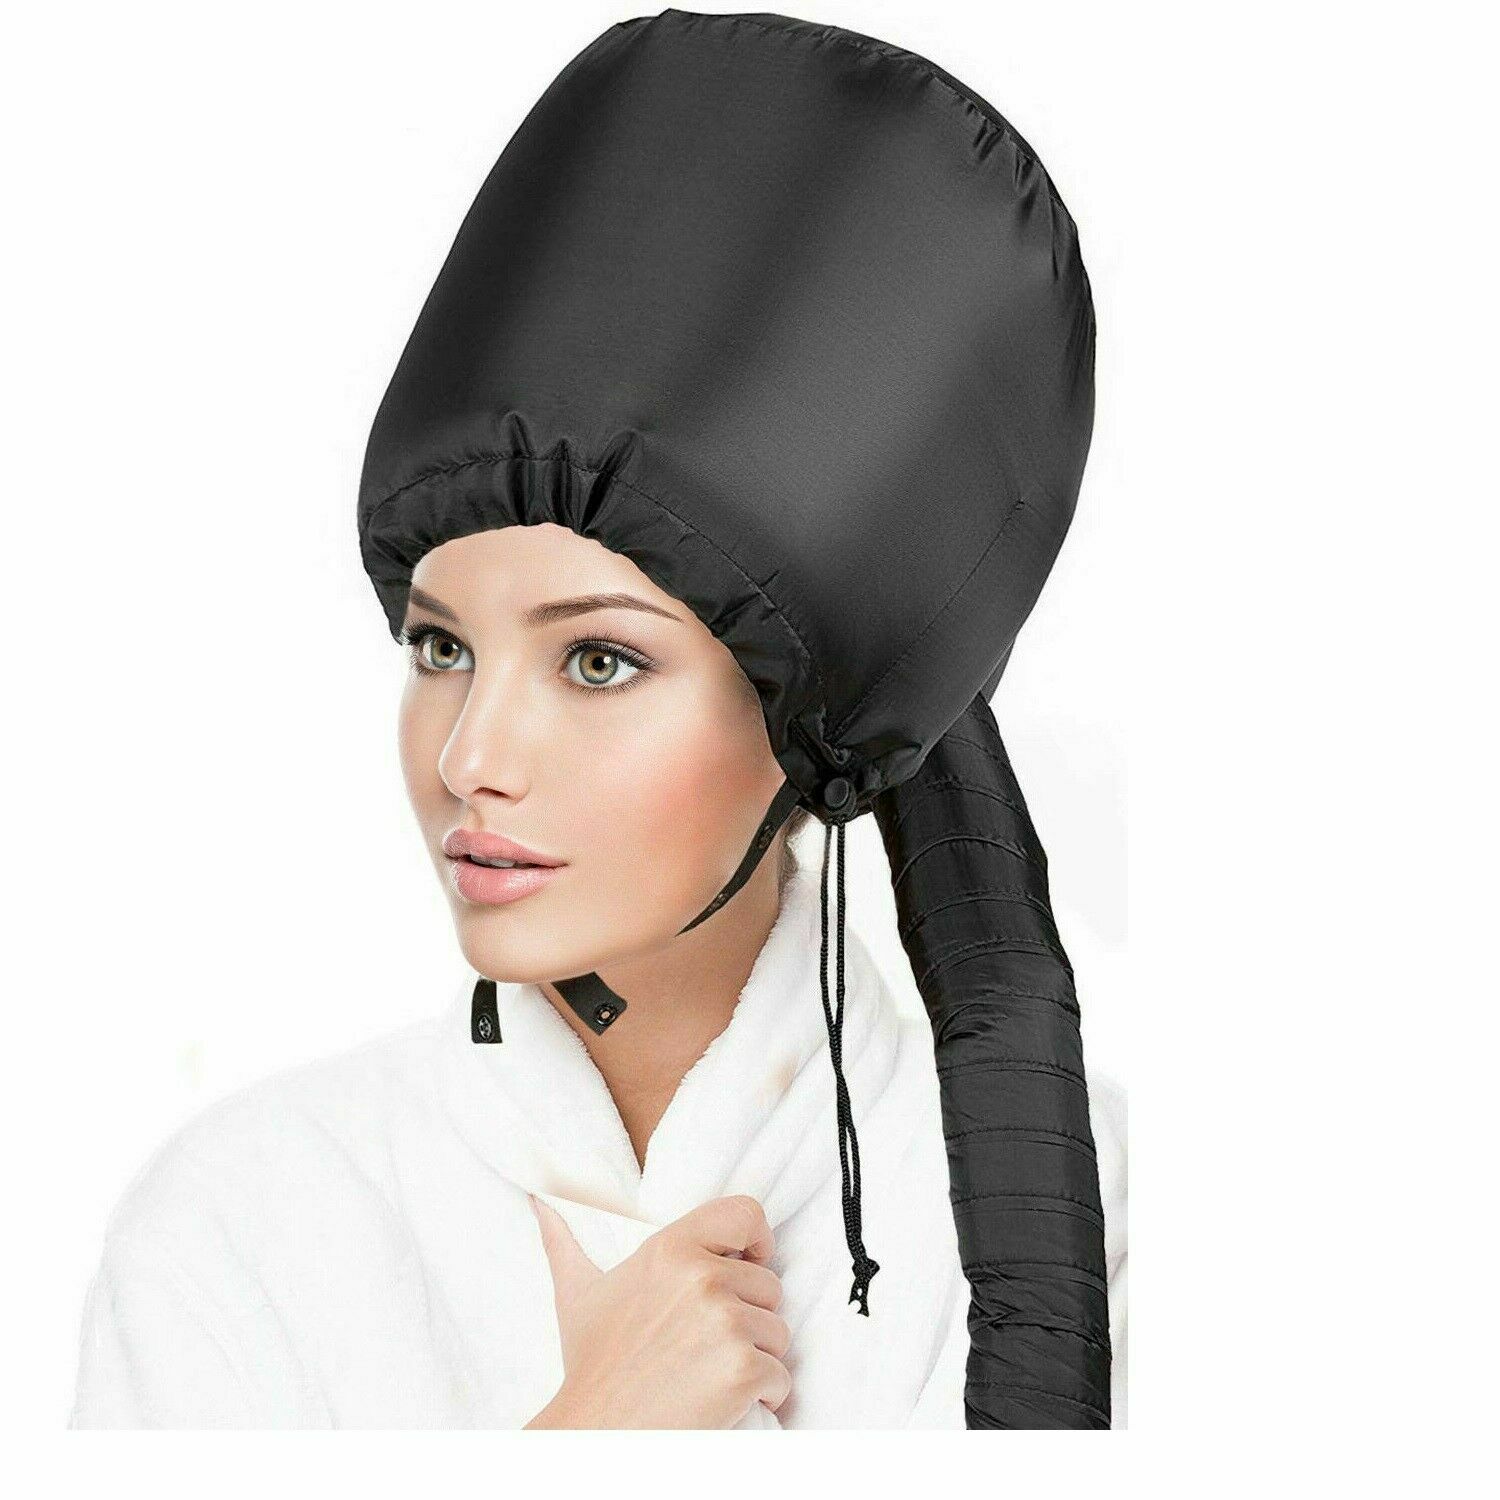 Portable Soft Hair Drying Cap Bonnet Hood Hat Blow Dryer Attachment With Pouch